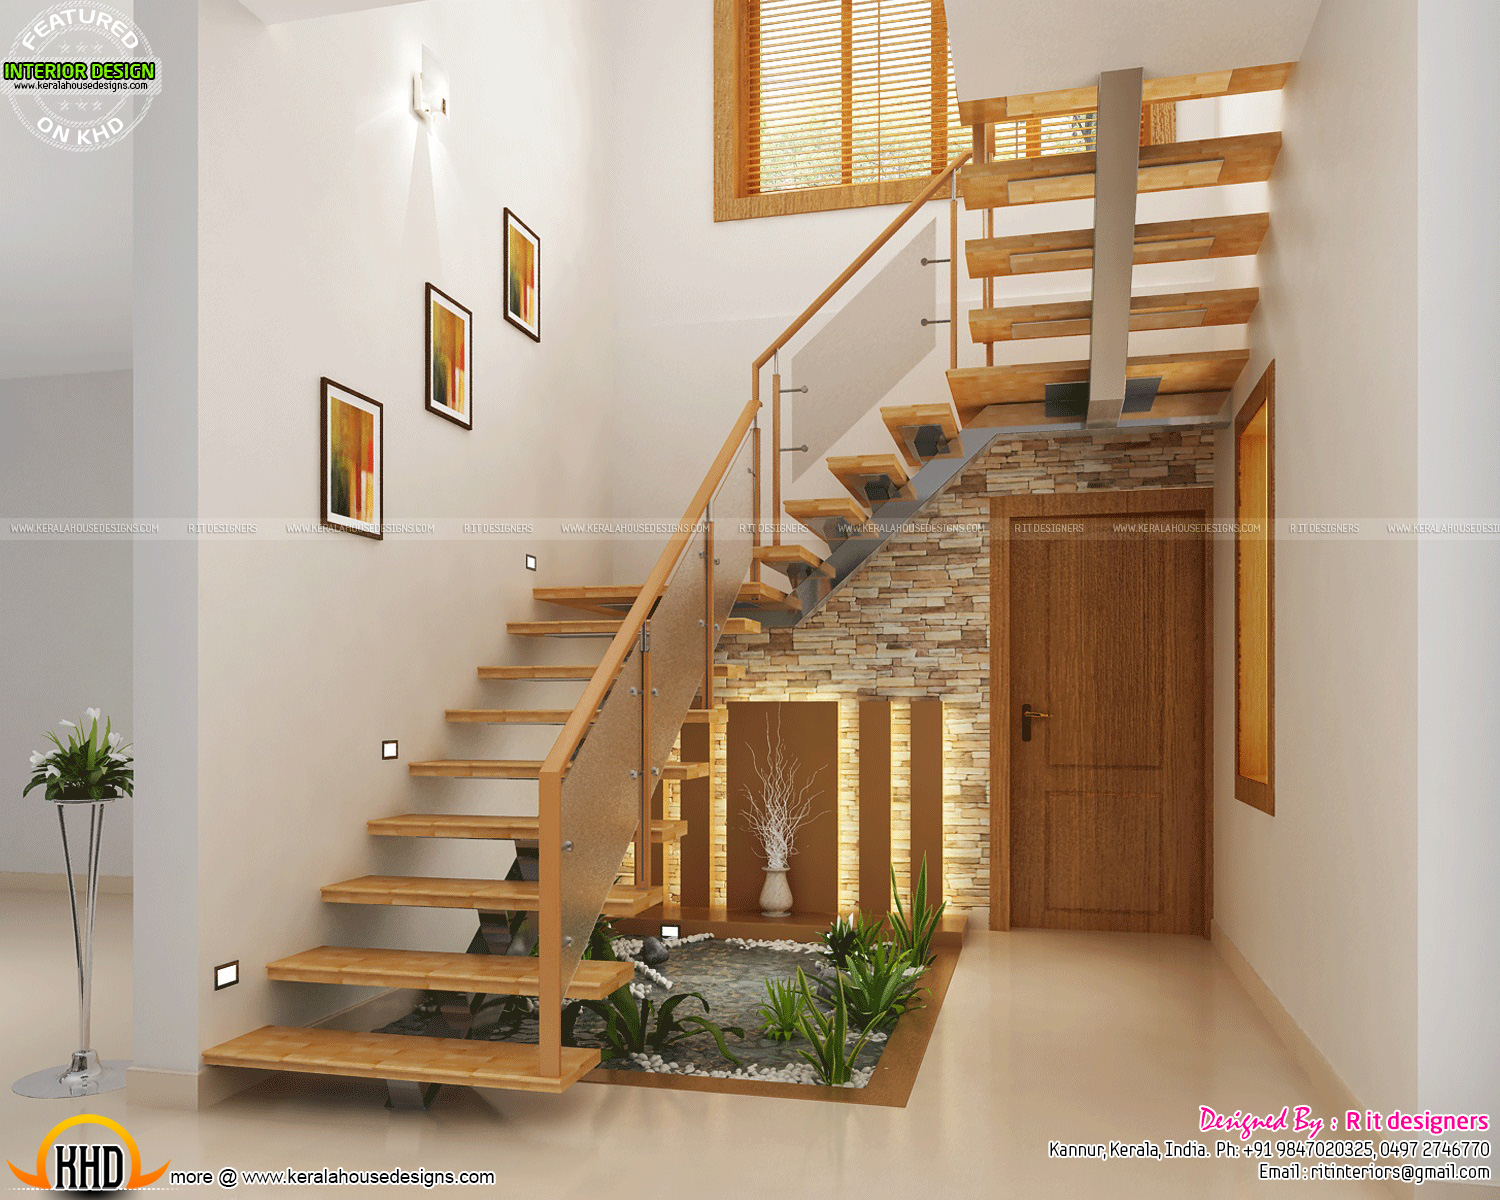  Under  Stair  design wooden stair  kitchen and living 